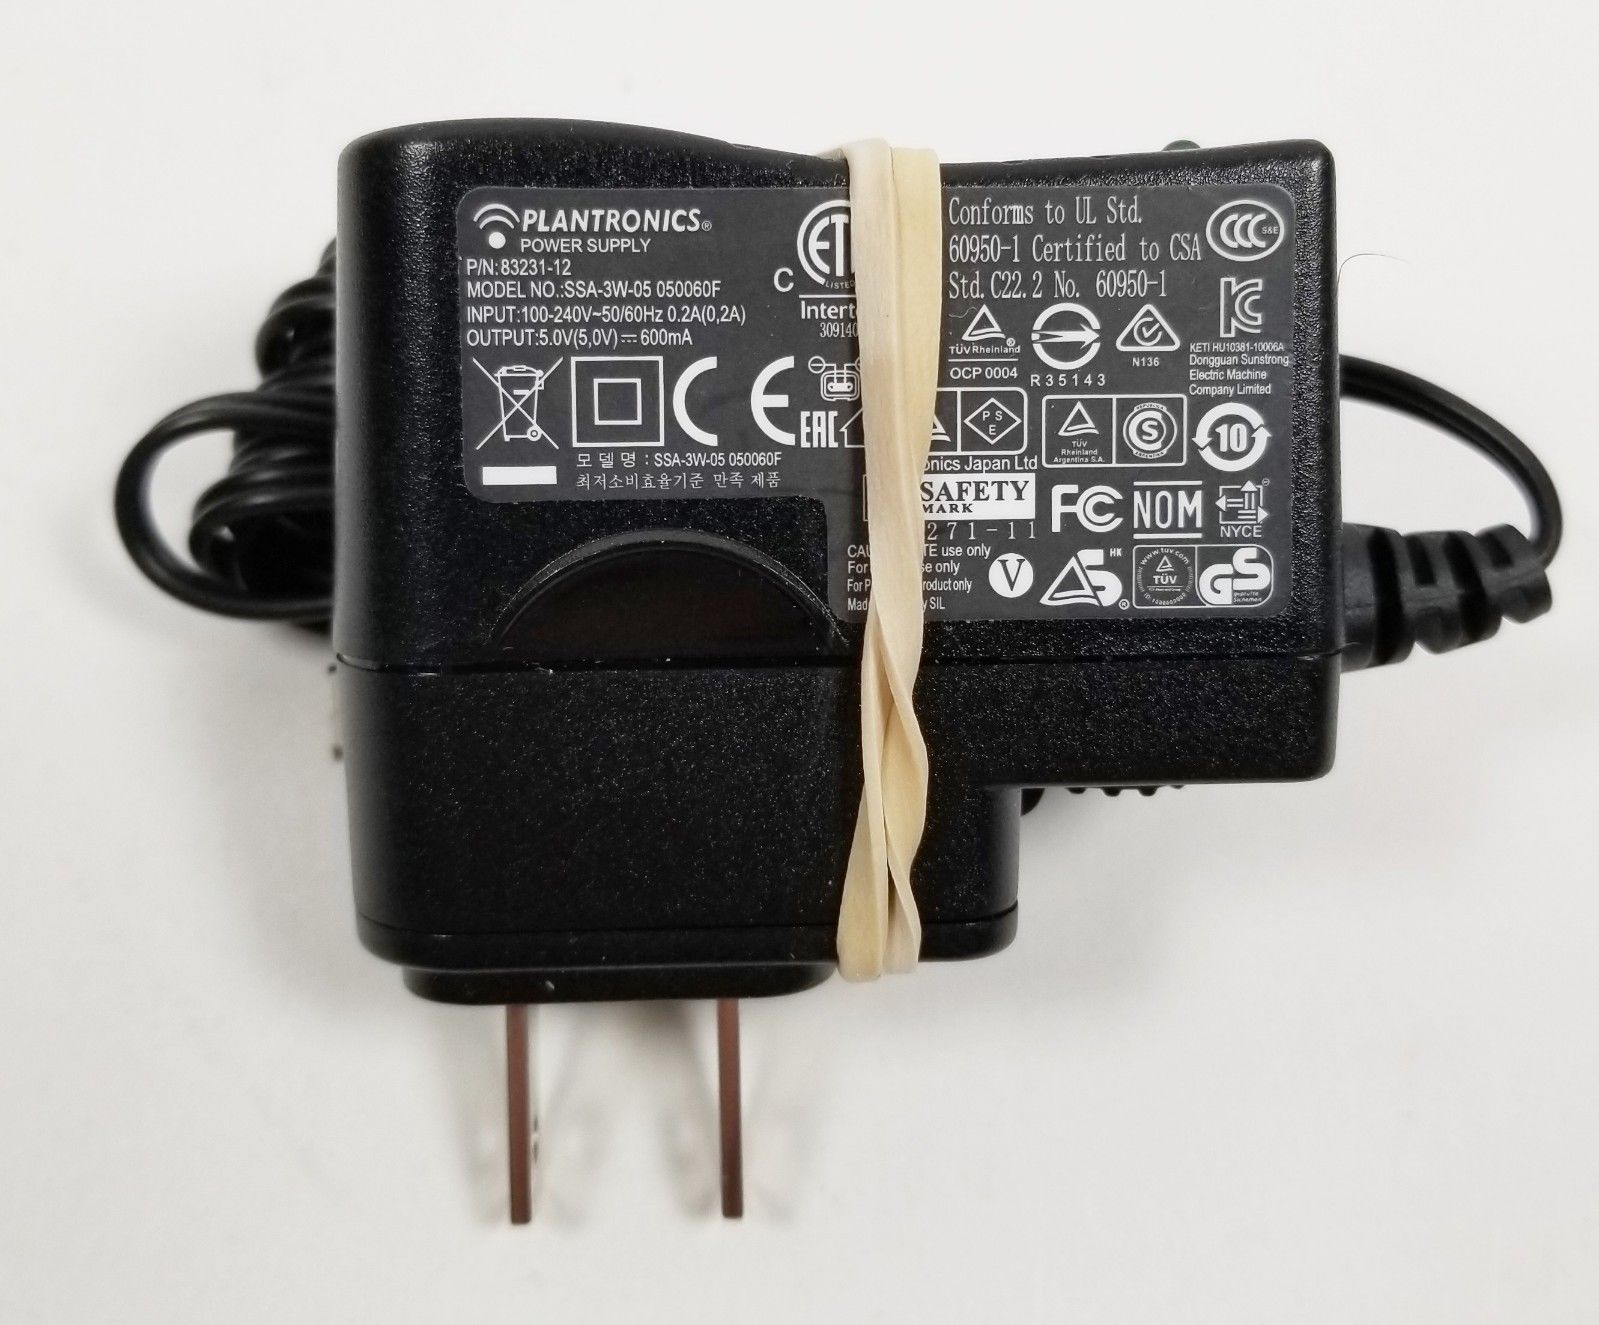 PLANTRONICS AC Adapter Power Supply Micro-USB 83231-12 SSA-3W-05 050060F Brand: Plantronics Style: Power Adapter MP